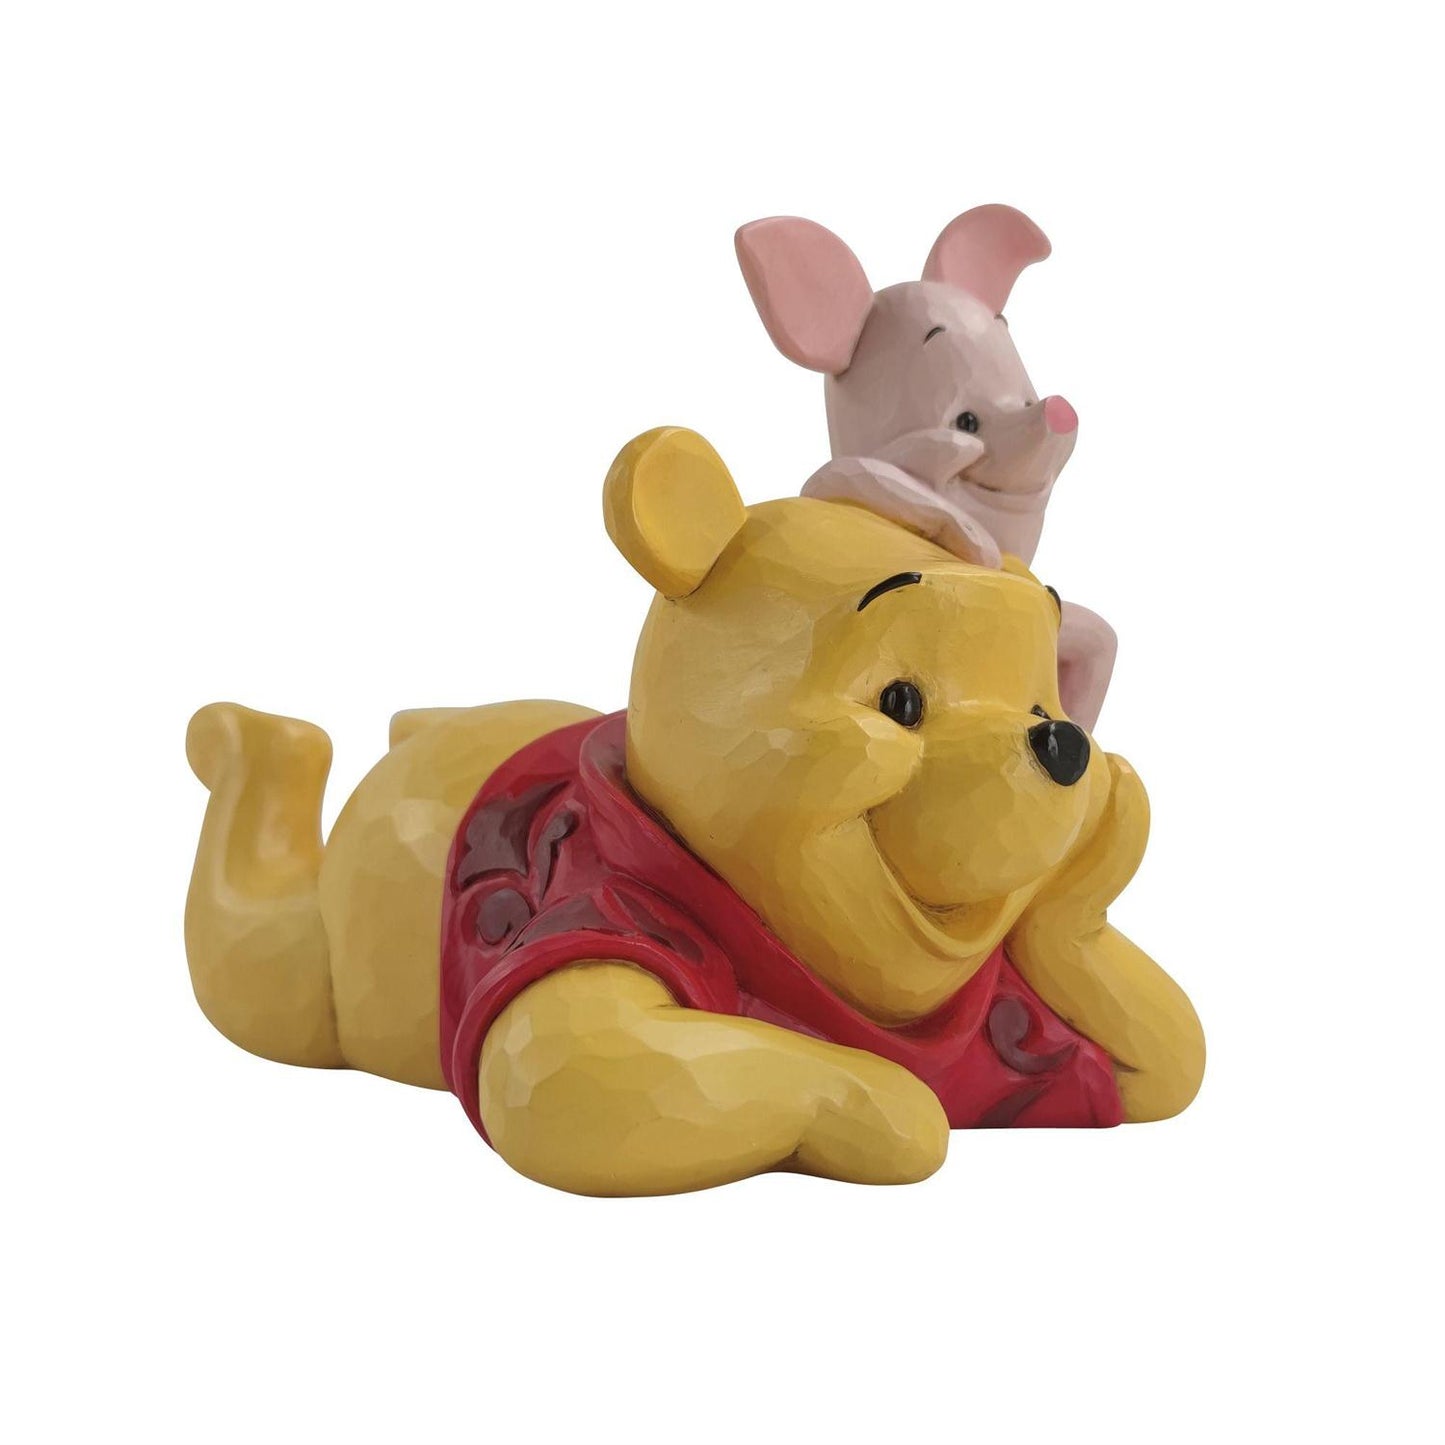 Jim Shore "Forever Friends" Pooh & Piglet